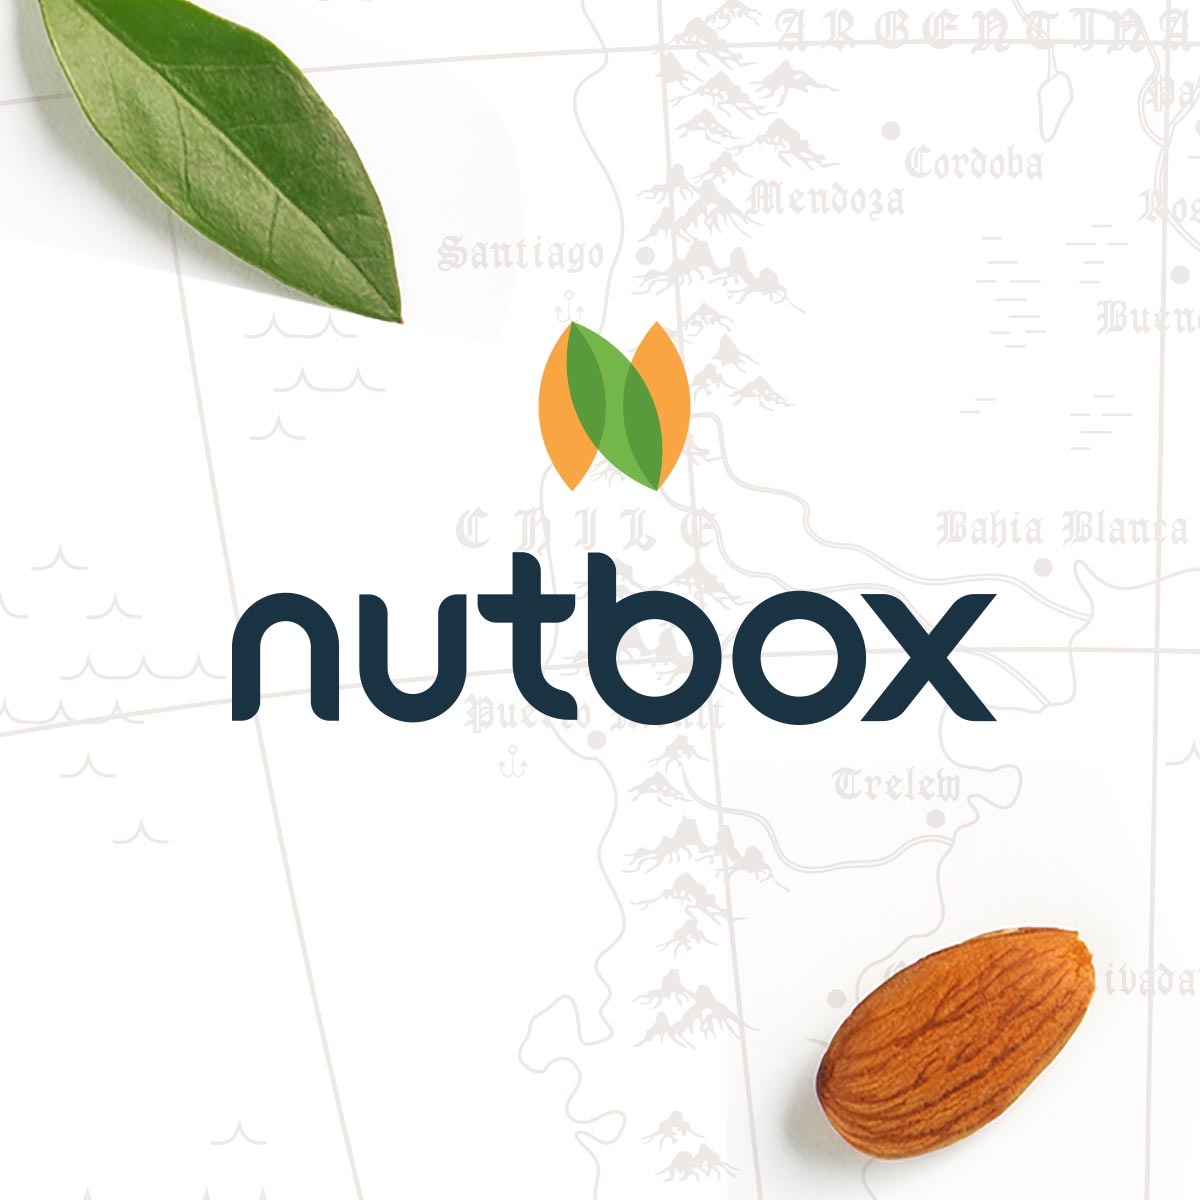 Nutbox logo.